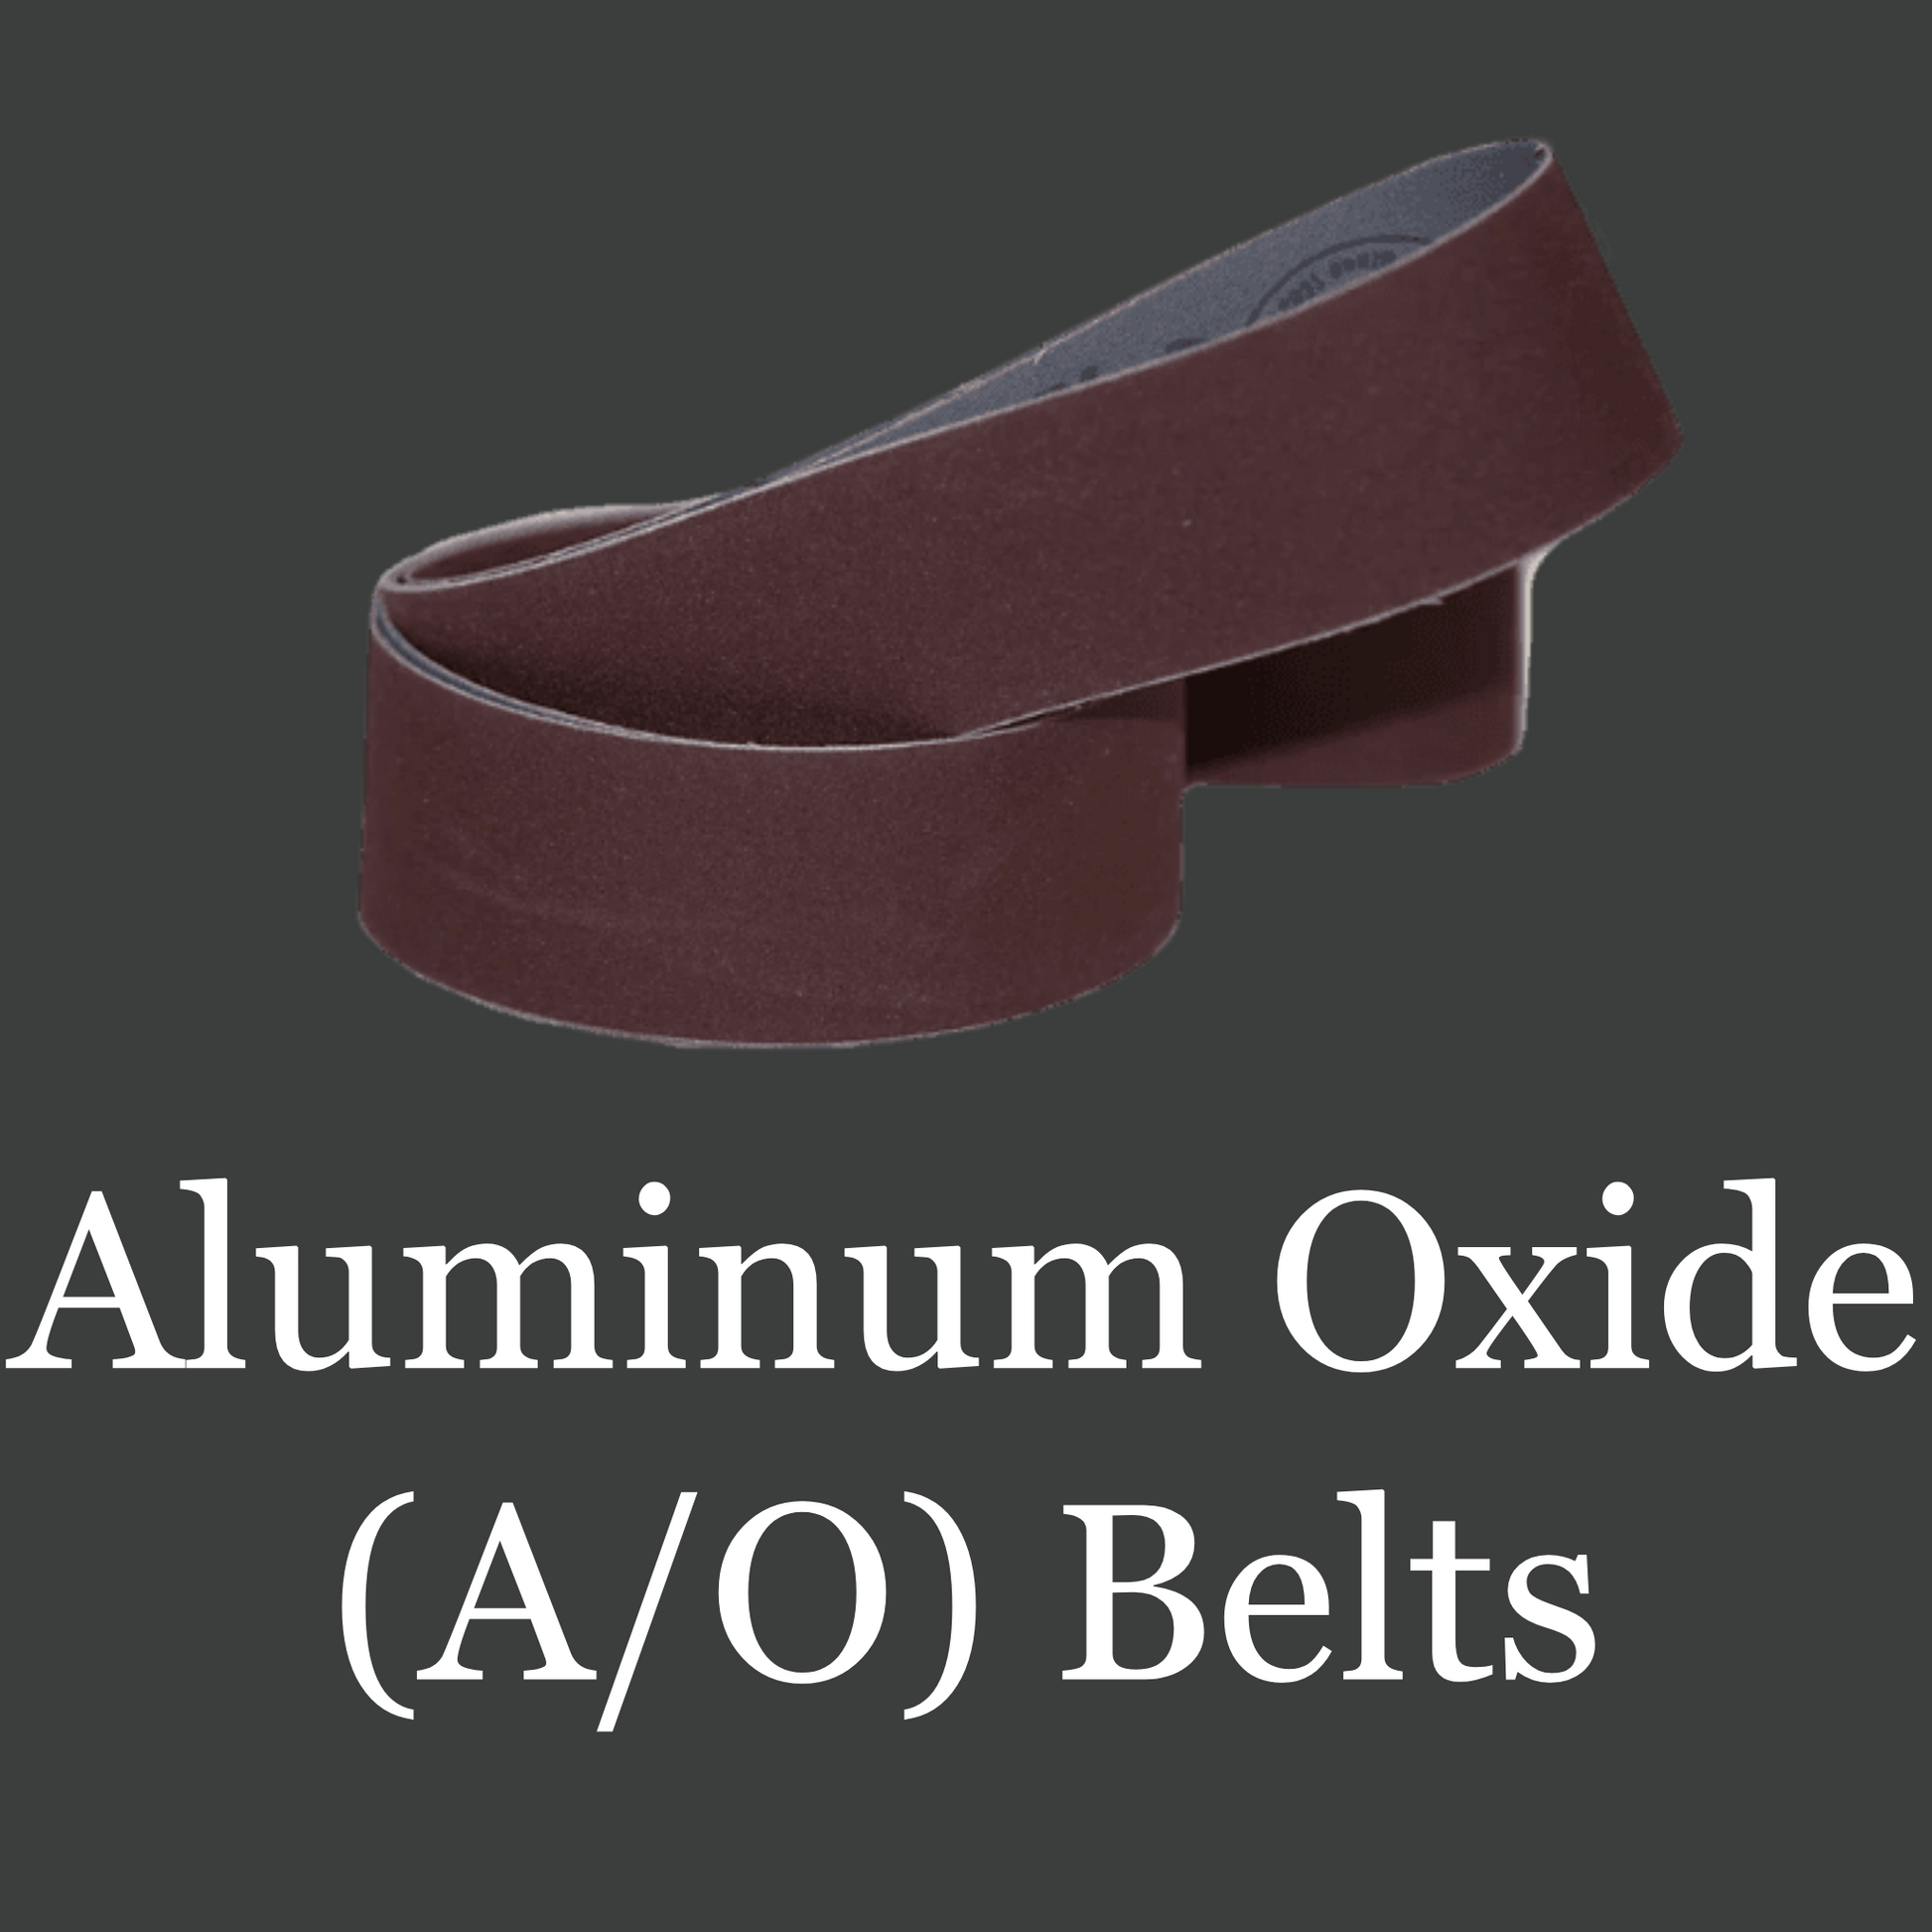 Aluminum Oxide 4” x 36” X Belt